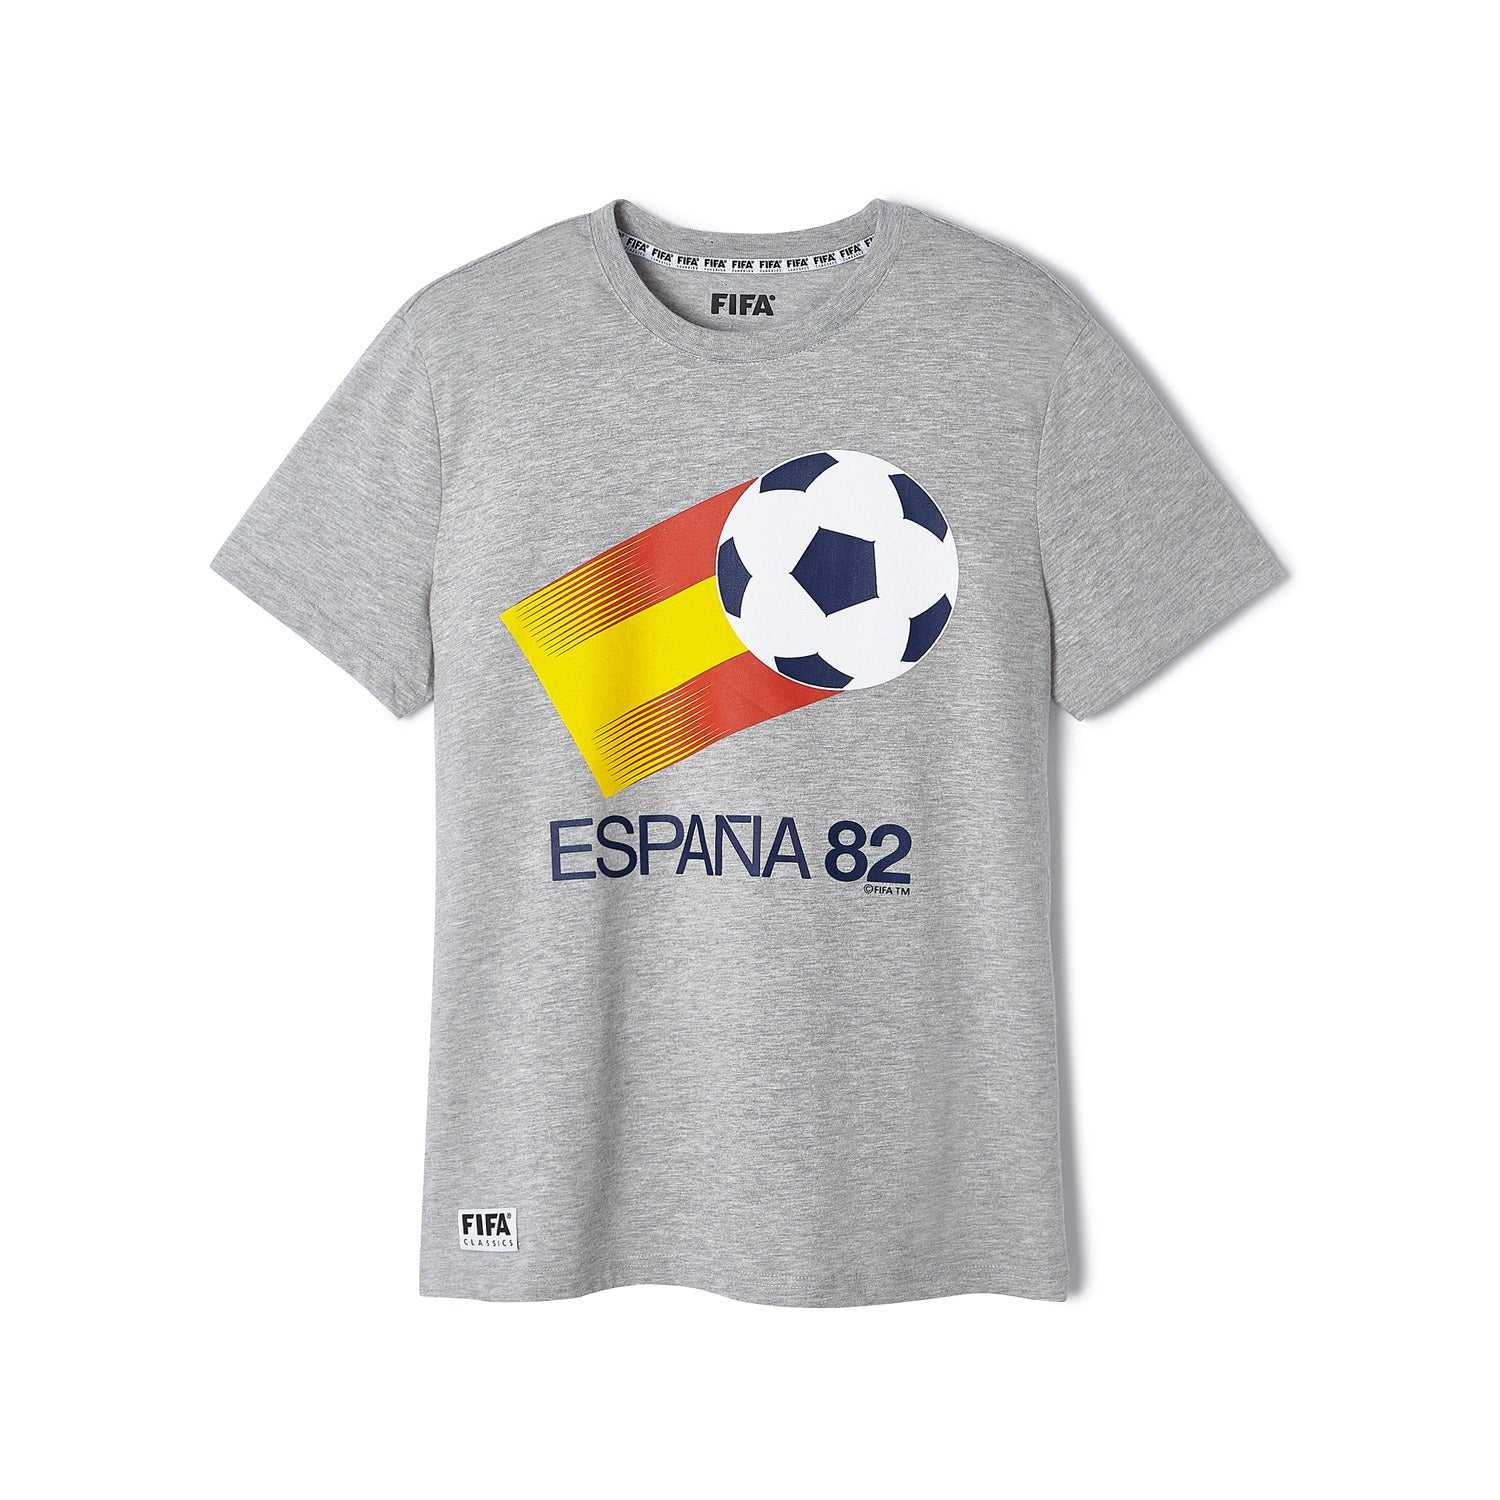 FIFA Rewind Spain '82 Emblem T-Shirt - Mens